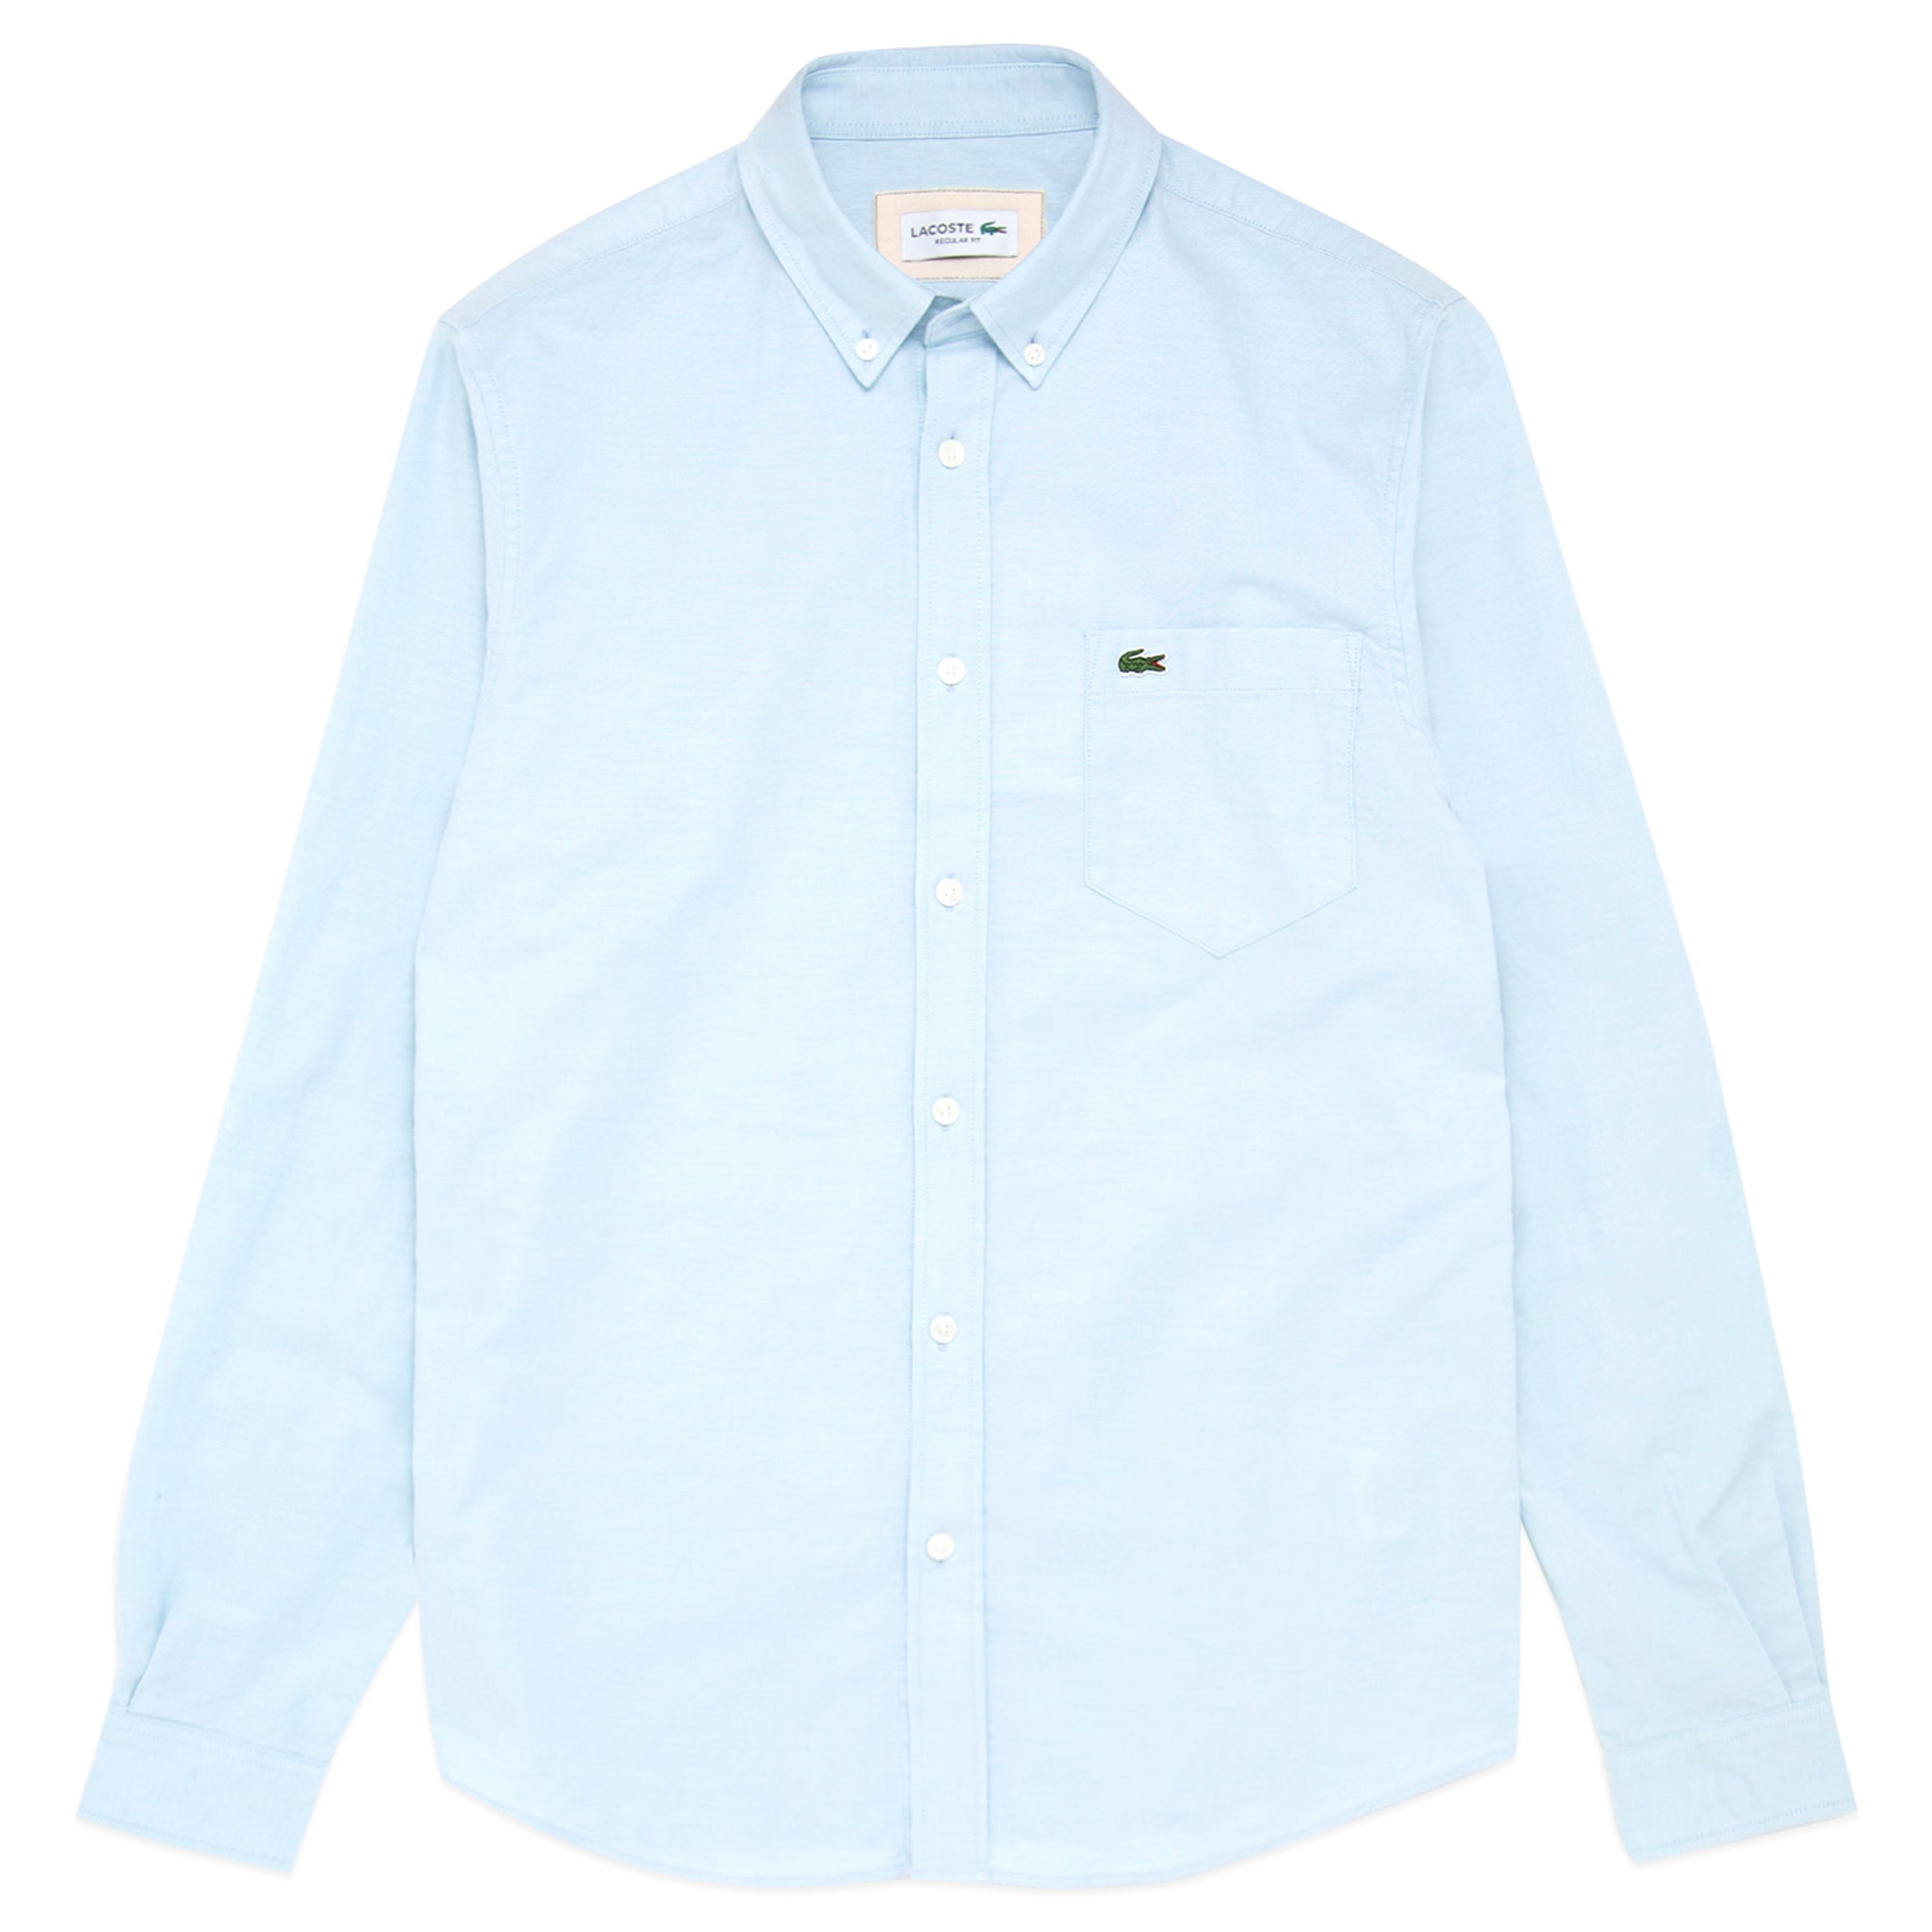 Lacoste Long Sleeve Casual Shirt CH0204 - Aqua Blue